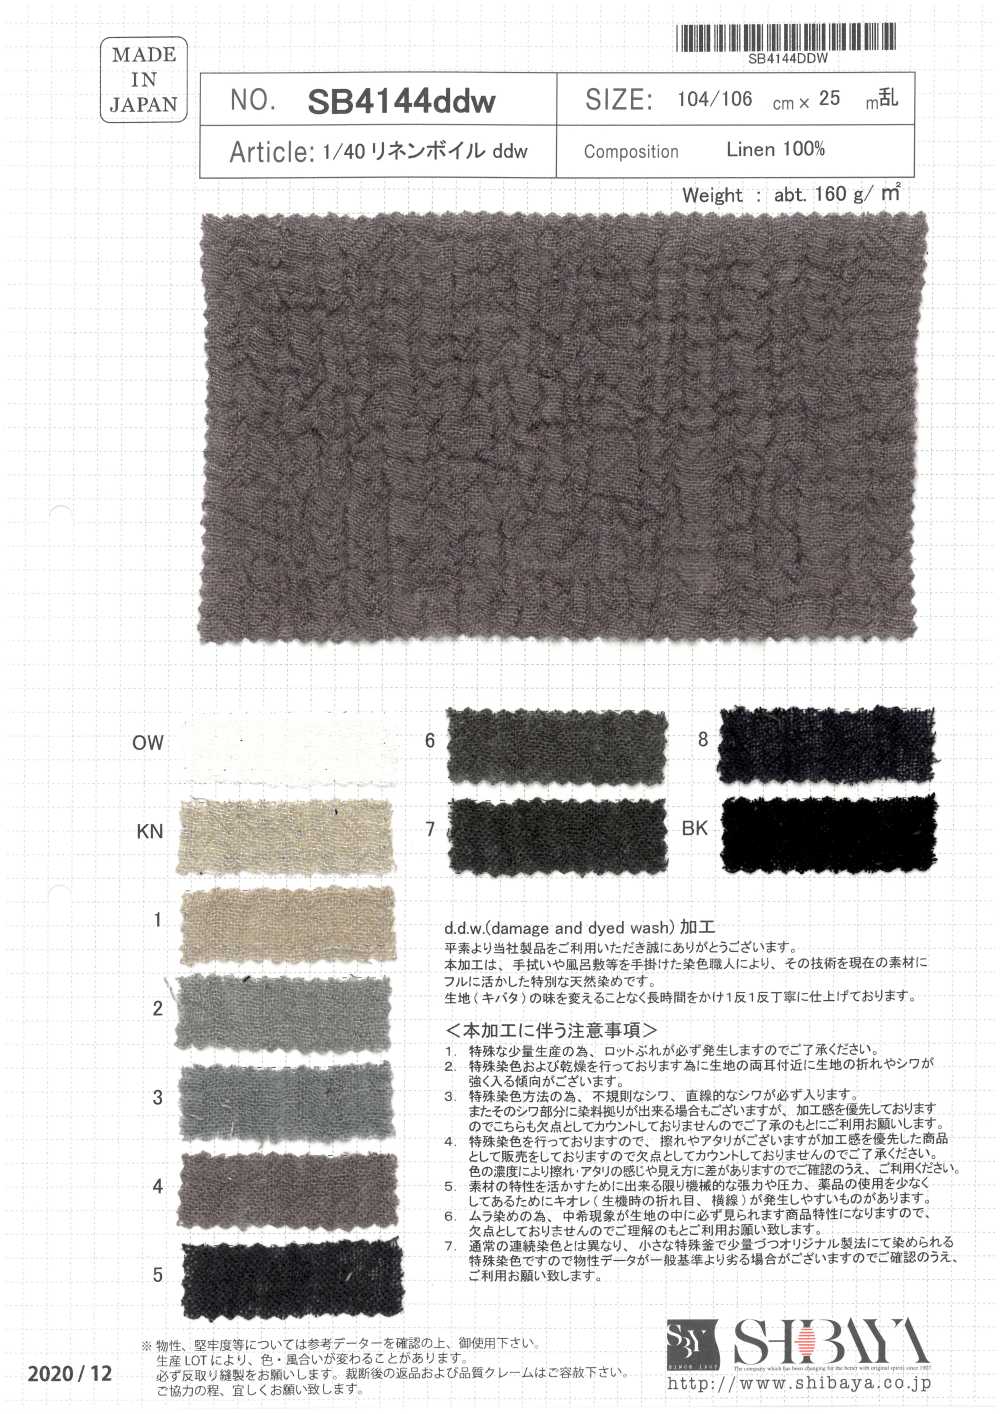 SB4144ddw Voile De Lin 1/40 DDW[Fabrication De Textile] SHIBAYA